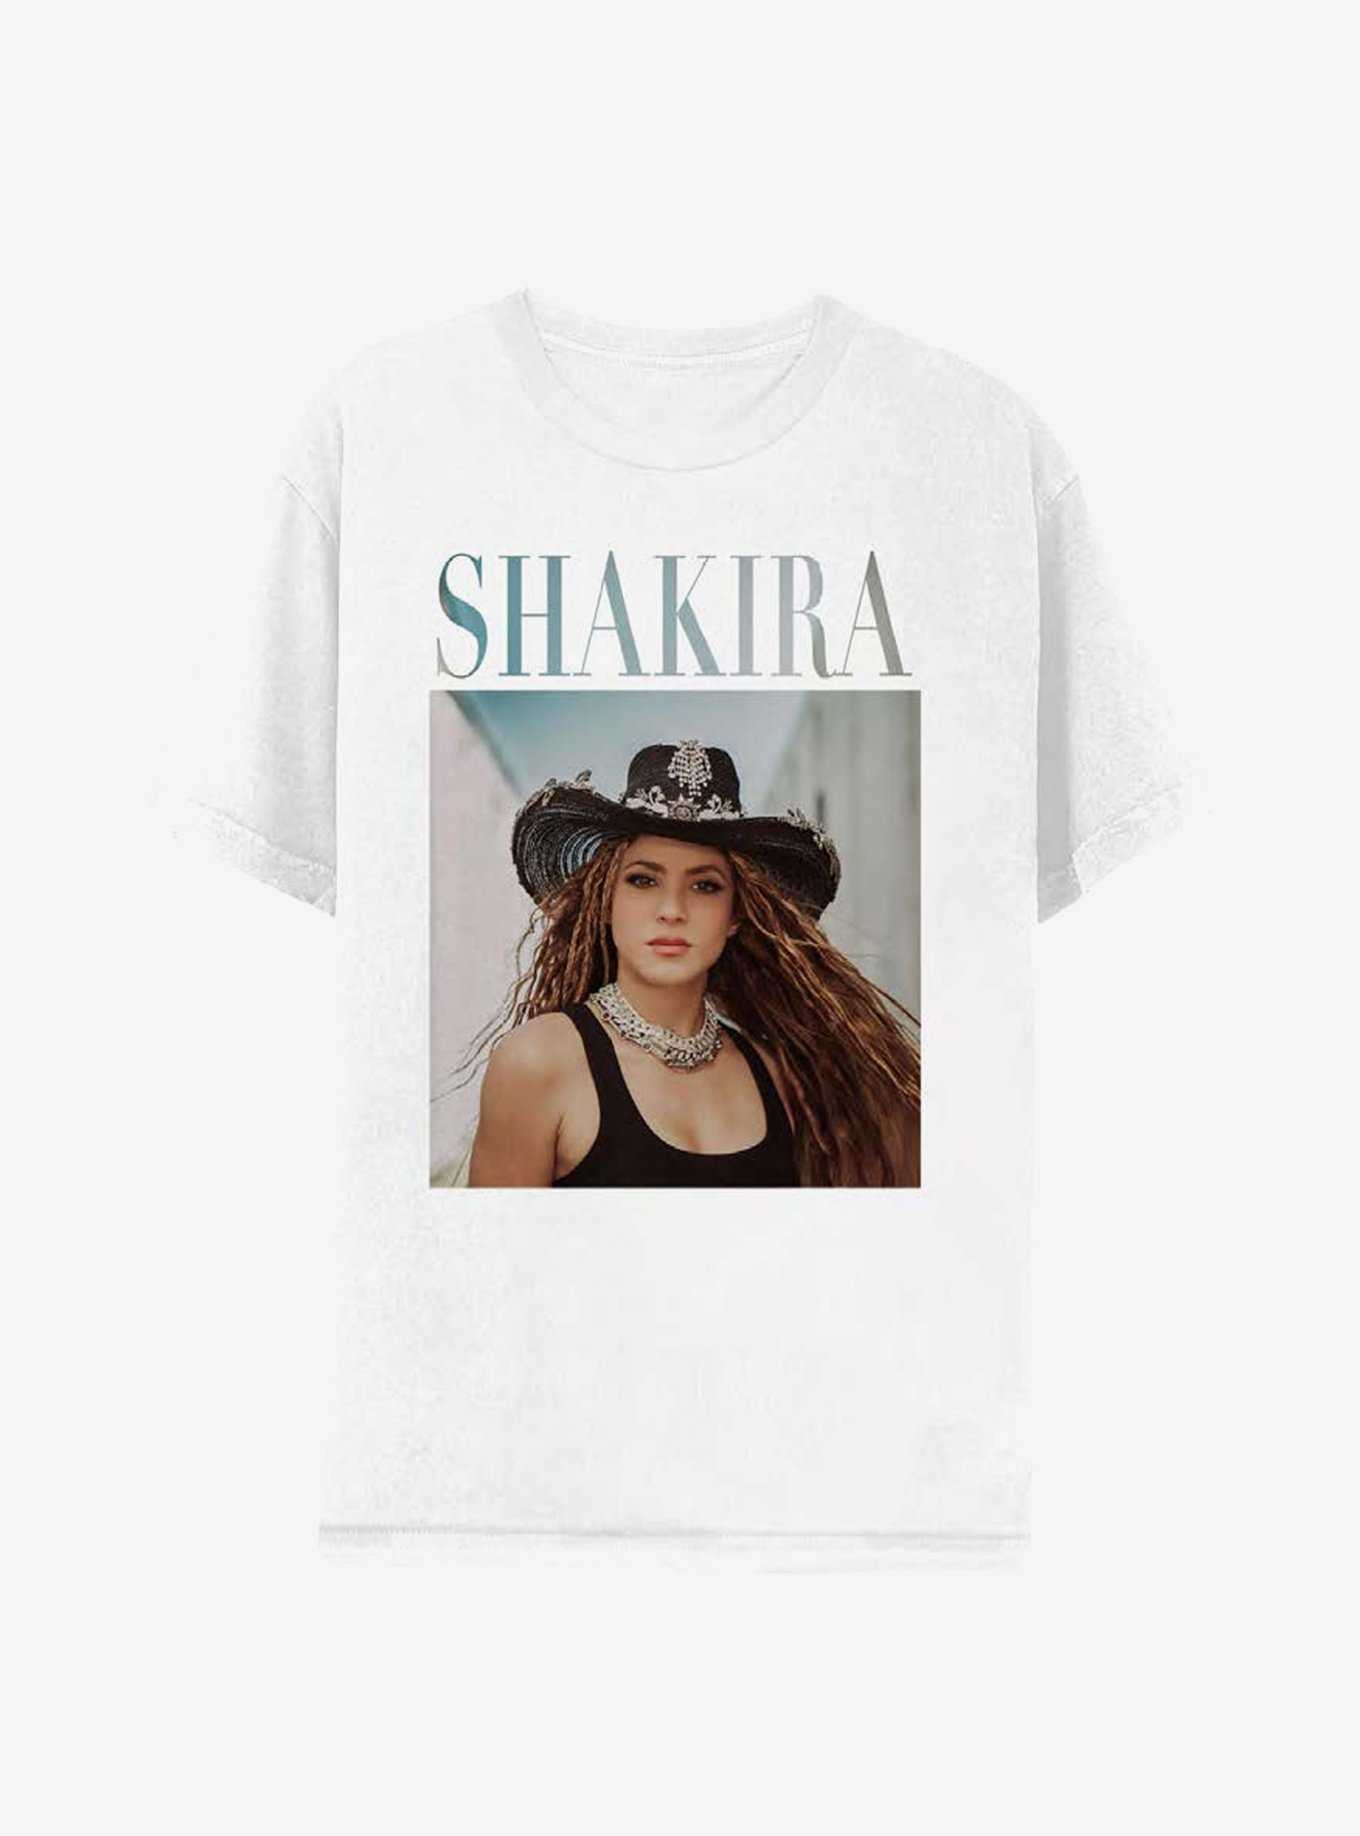 Shakira Cowboy Hat Boyfriend Fit Girls T-Shirt, , hi-res